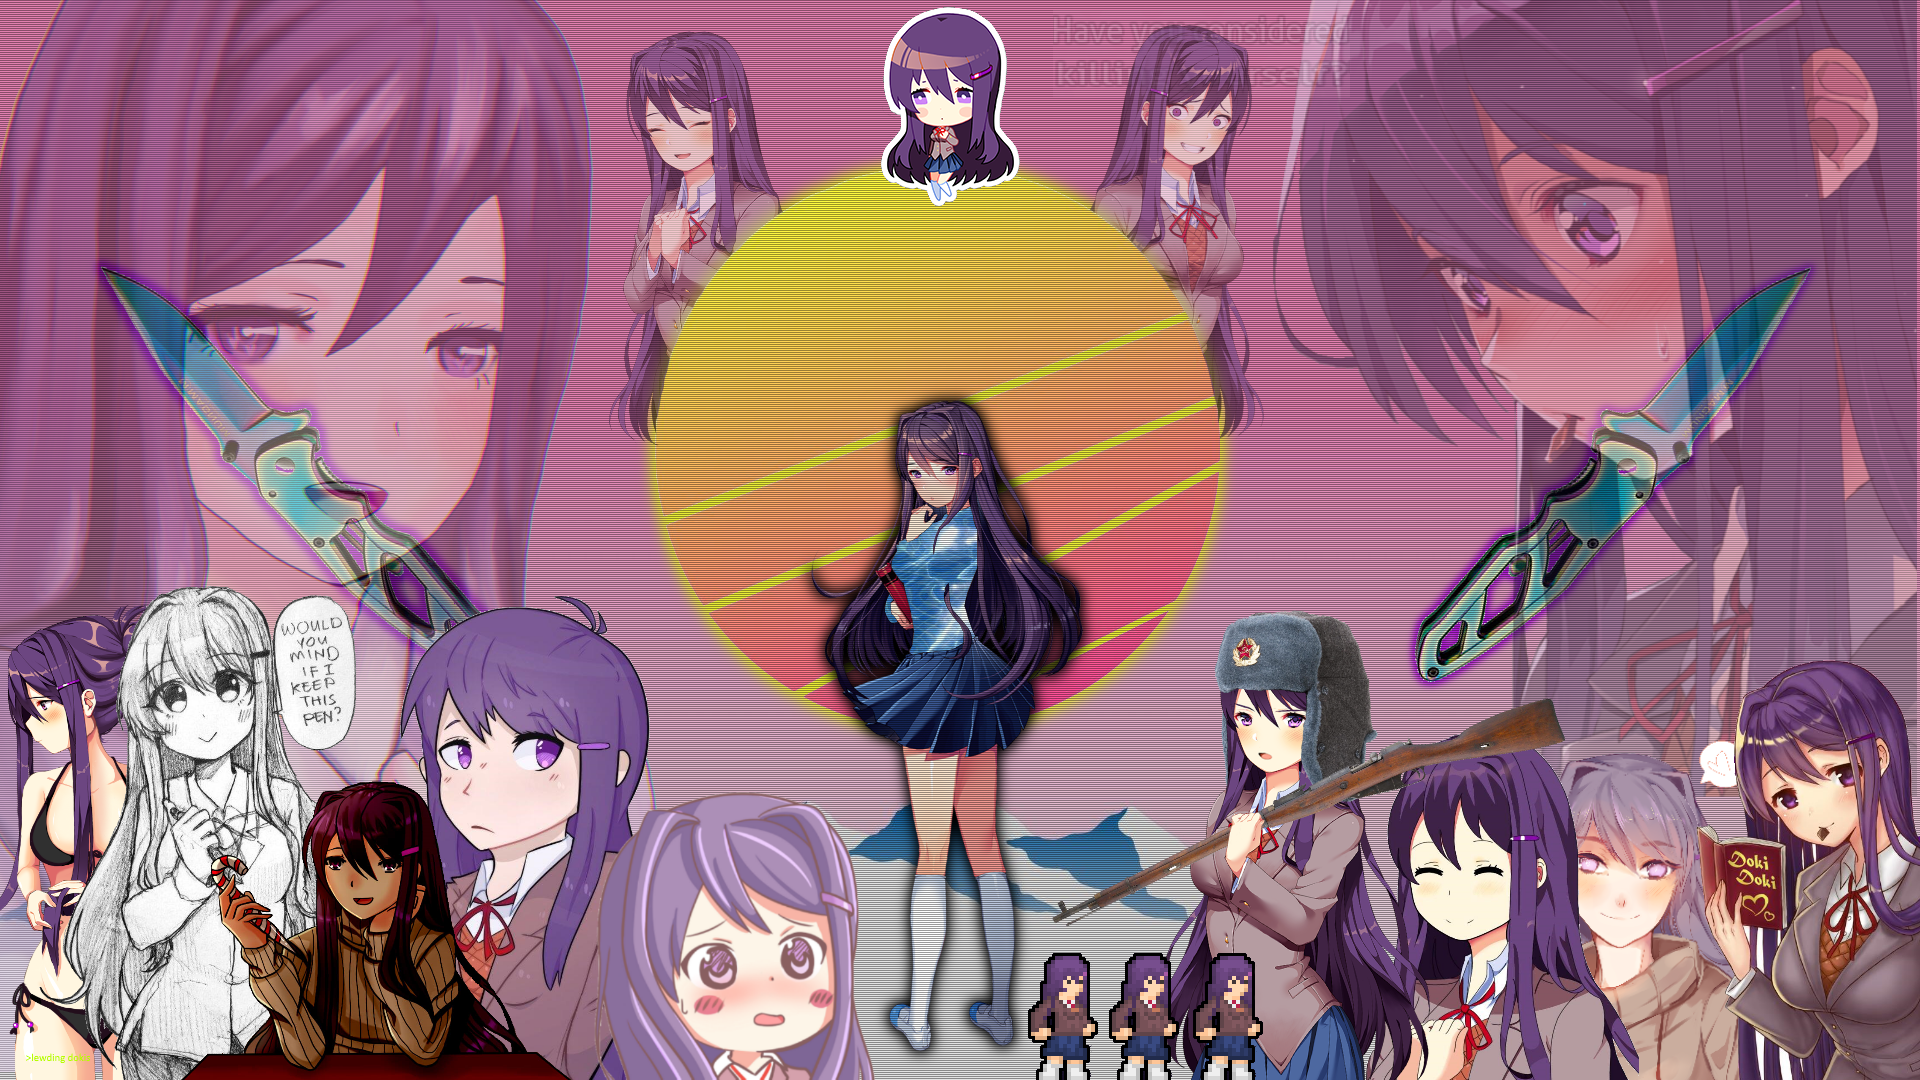 Yuri aesthetic background